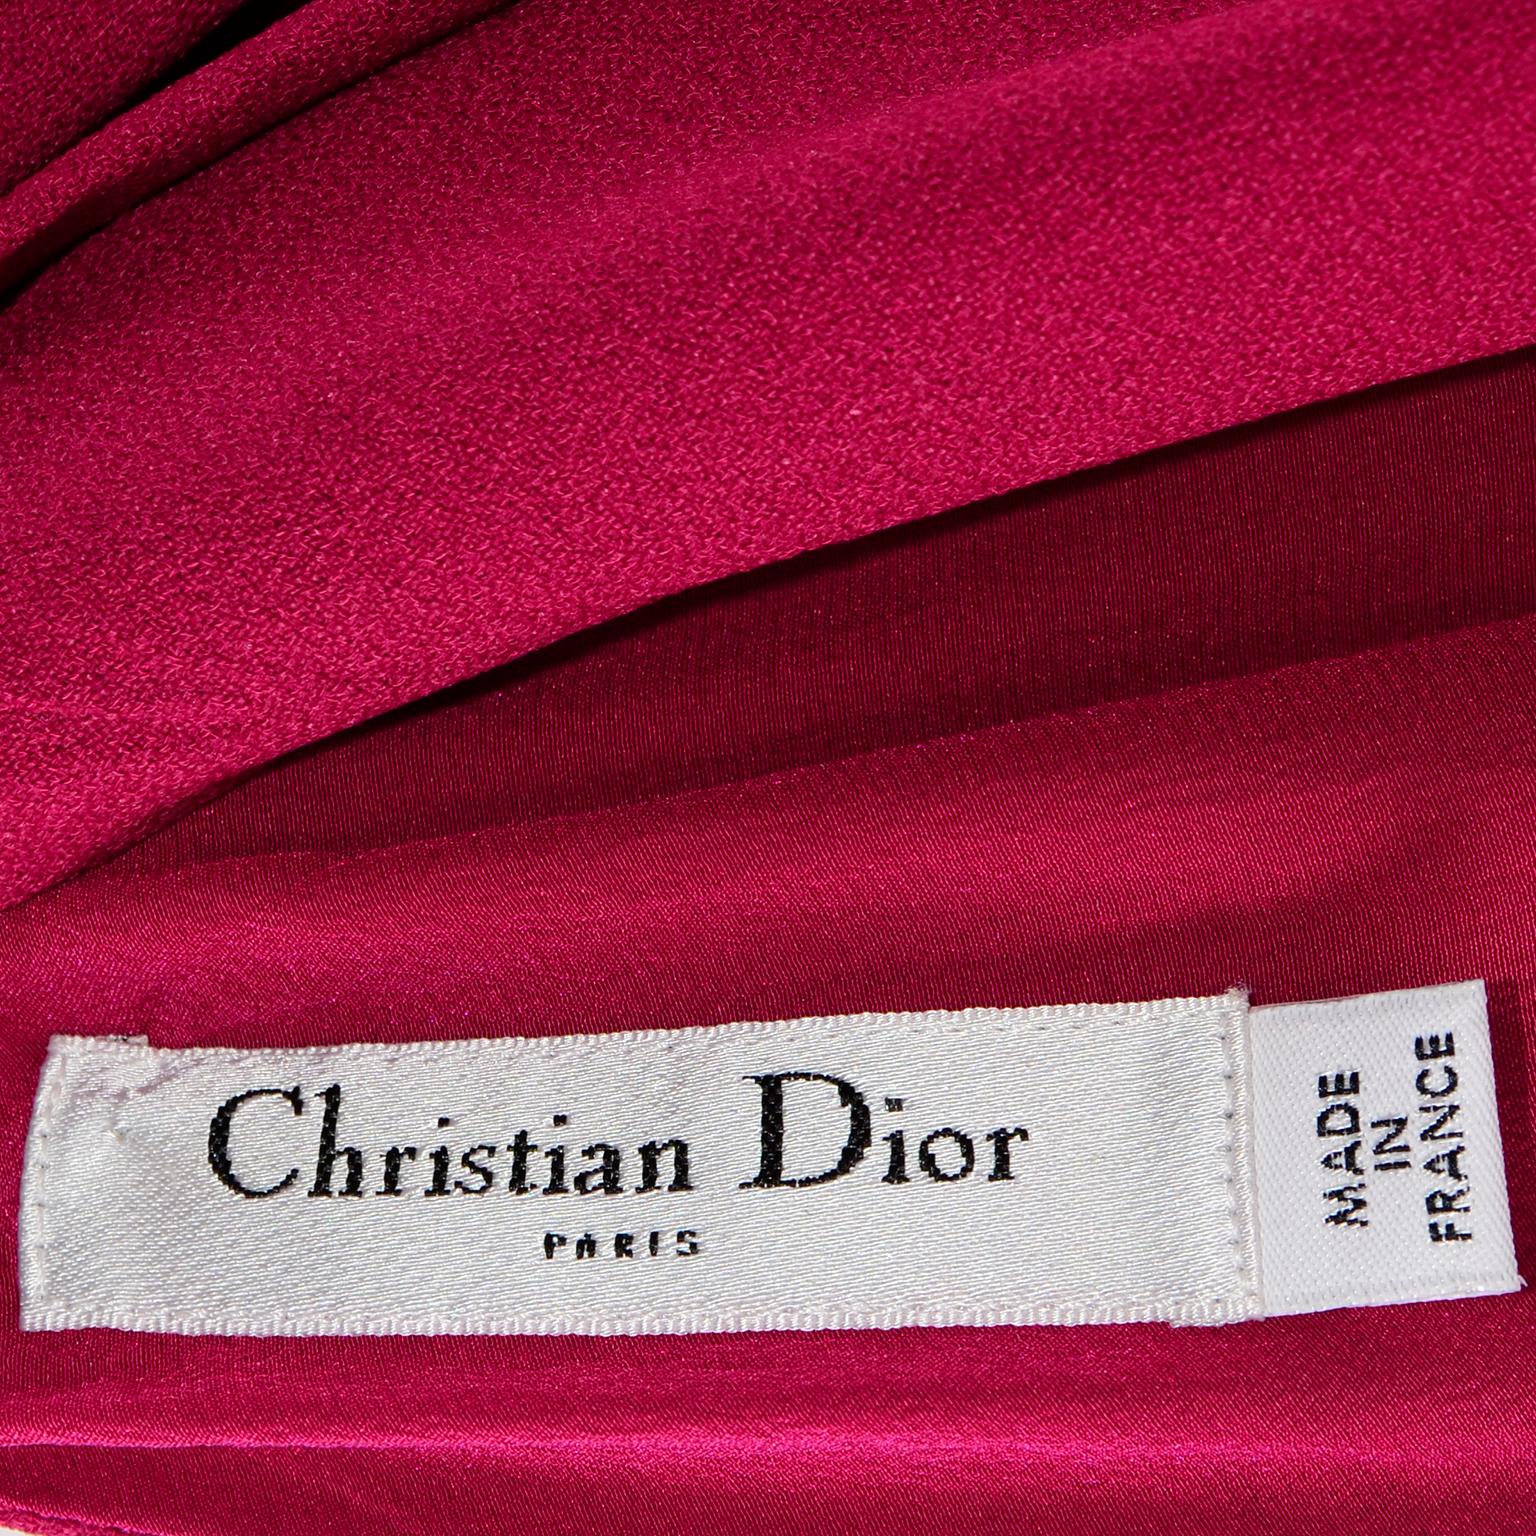 Christian Dior John Galliano Raspberry Magenta Pink 1930s Inspired Evening Dress 5